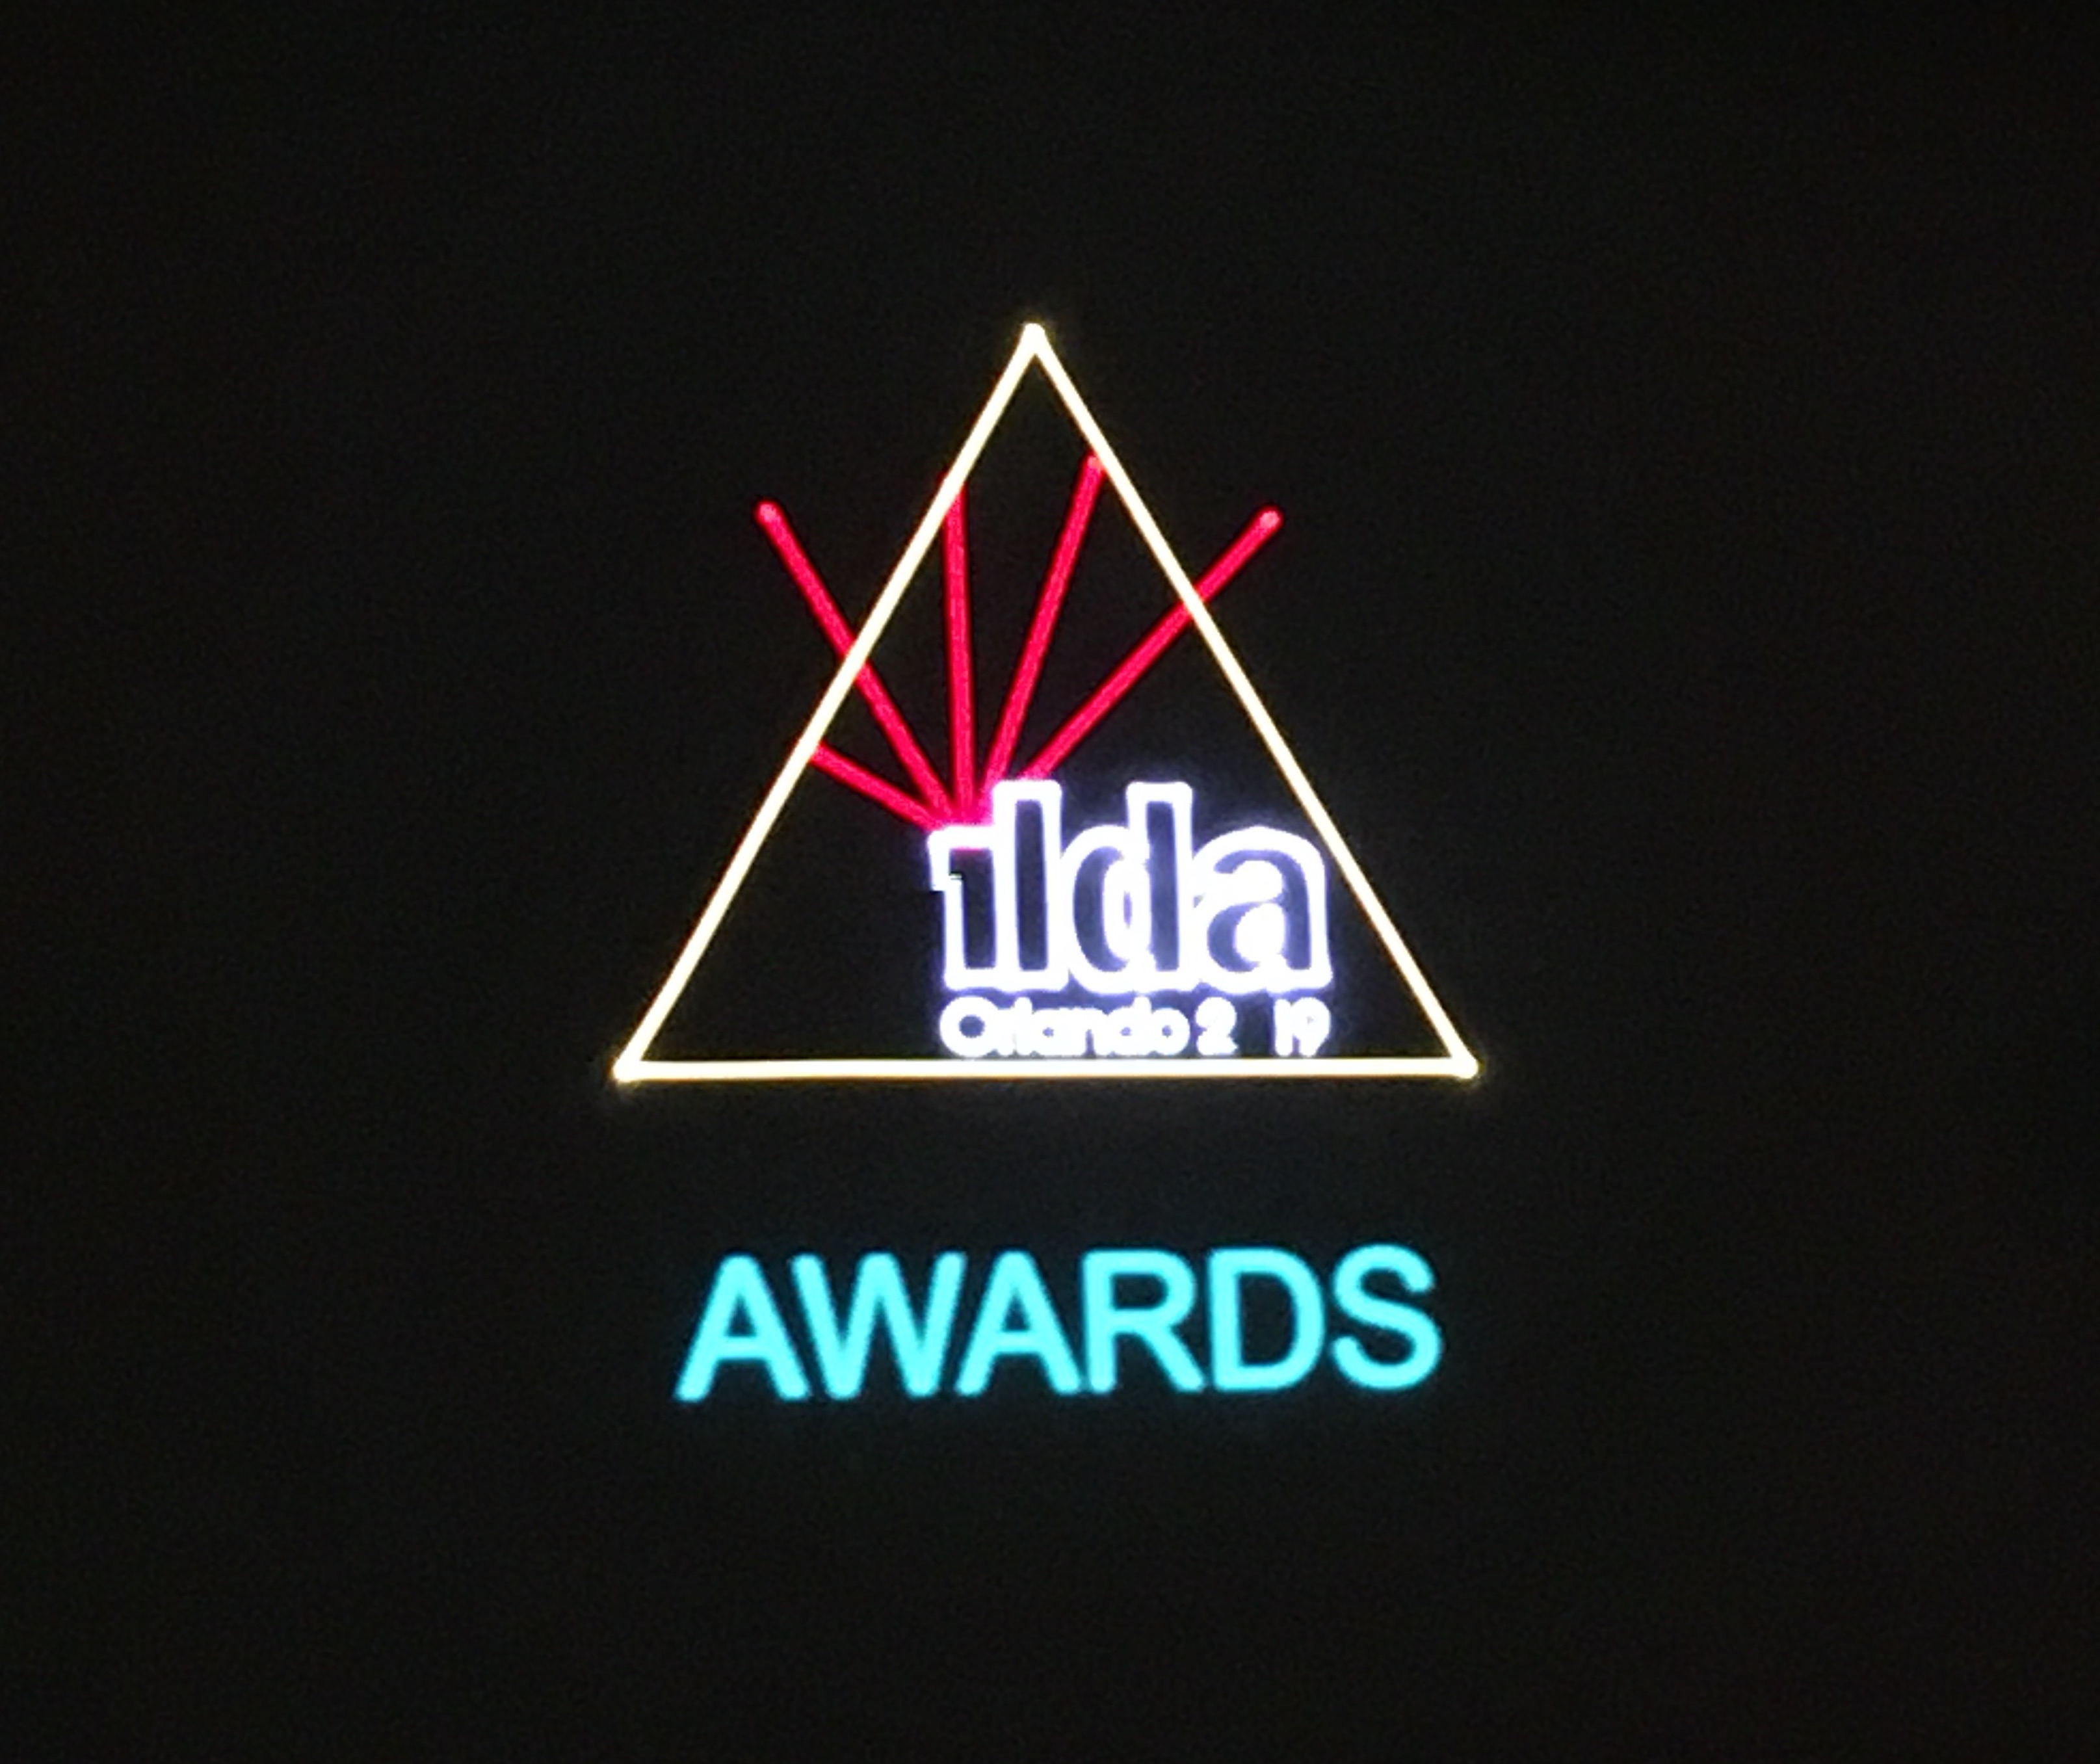 ILDA awards Orlando